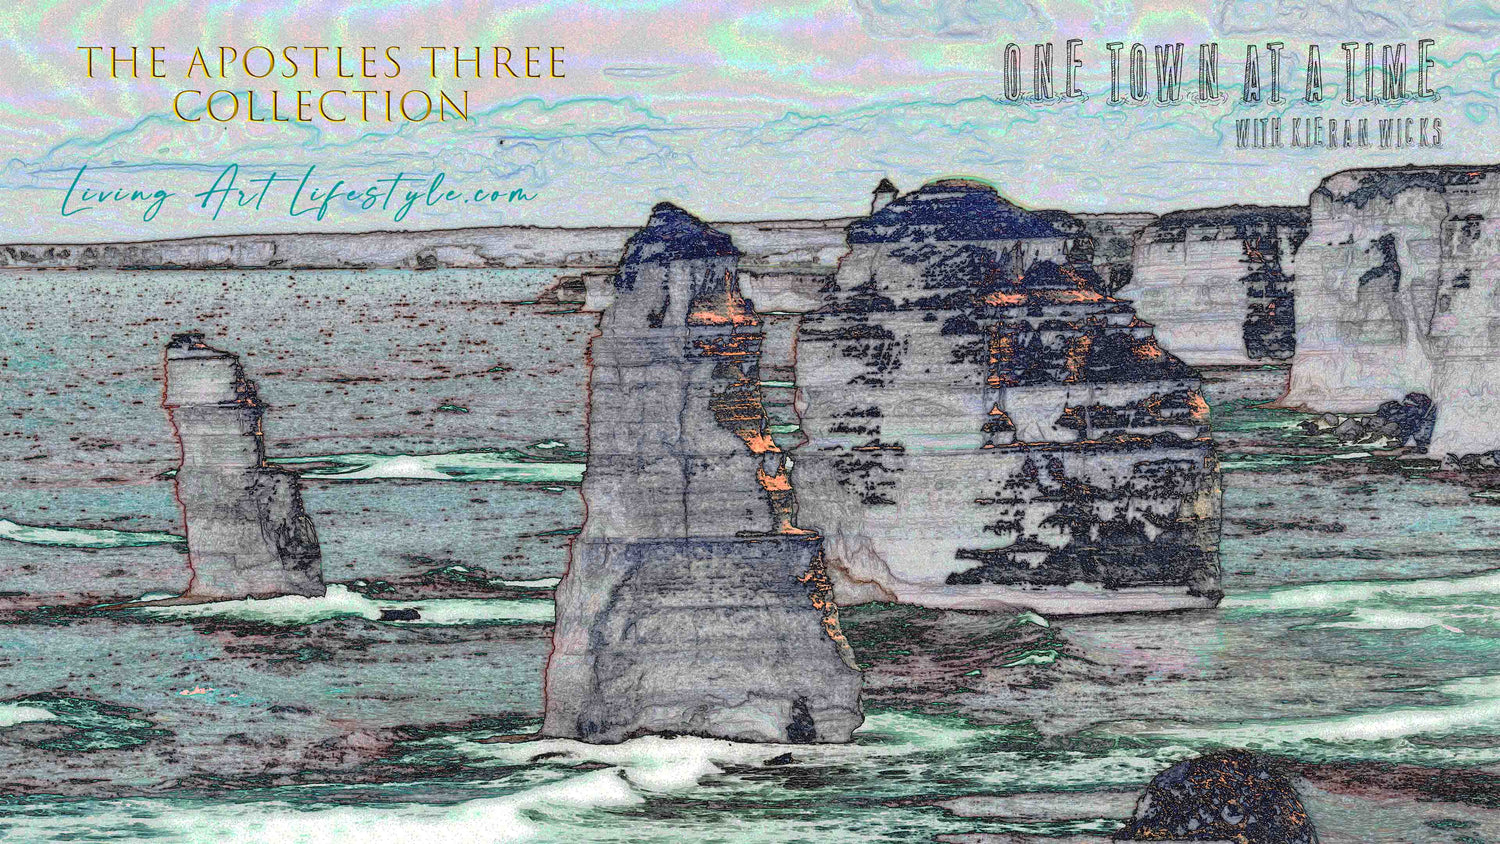 THE APOSTLES THREE COLLECTION - DIGITAL ART 12 APOSTLES Wonder of the World Great Ocean Road Victoria ocean monoliths